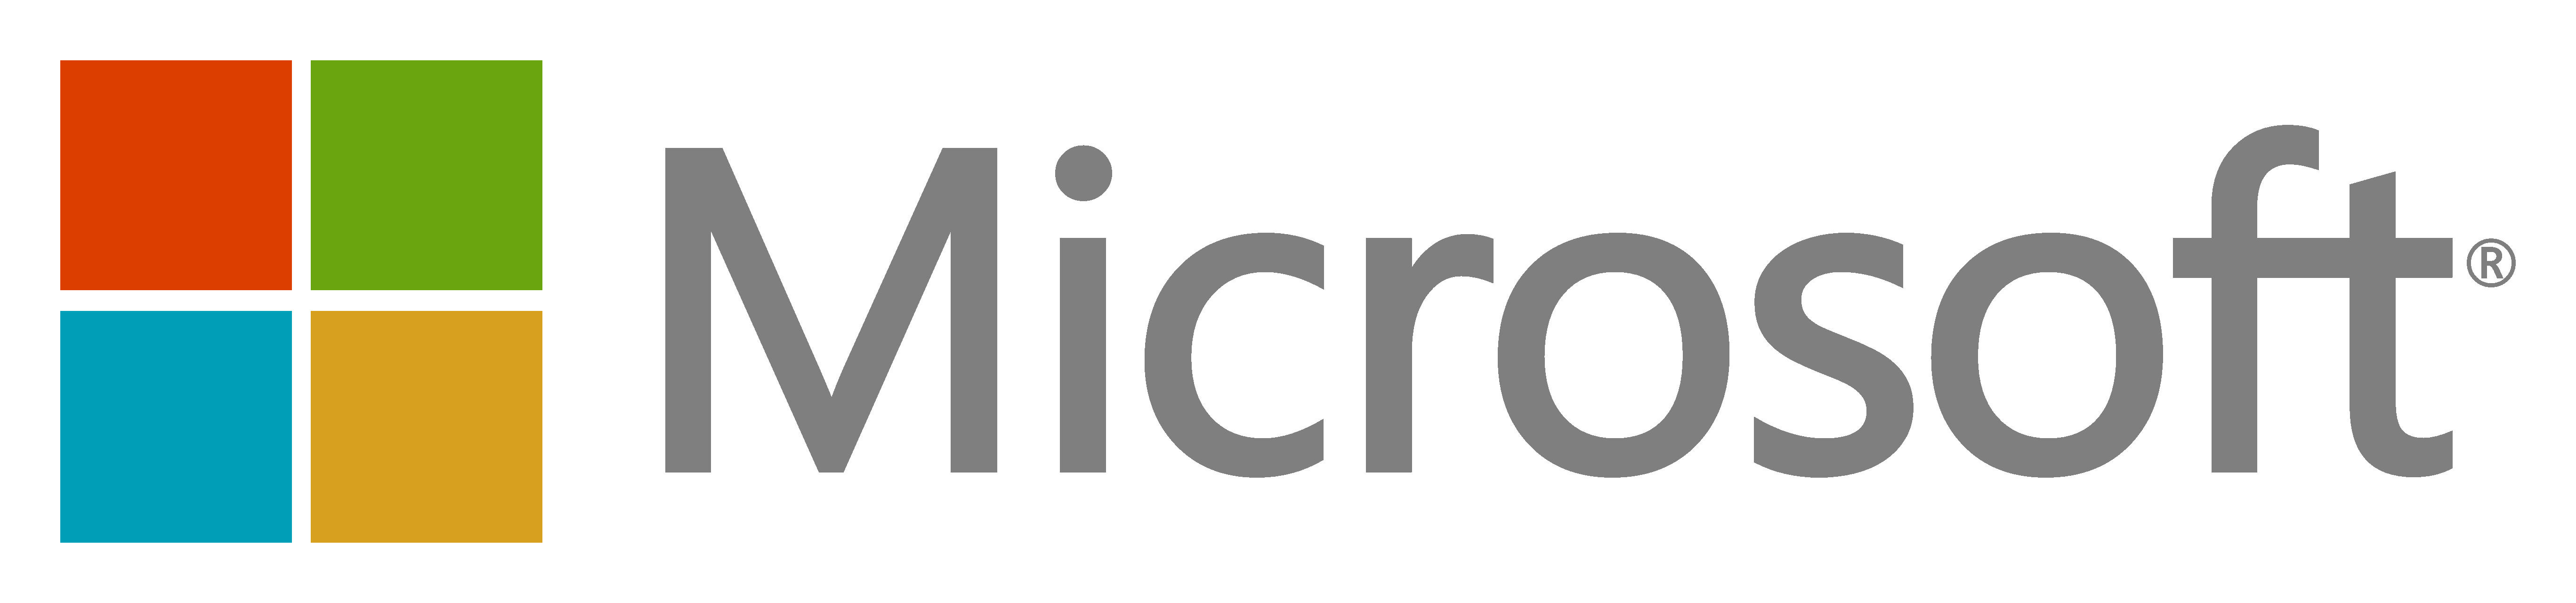 microsoft-logo-png-transparent-background-1